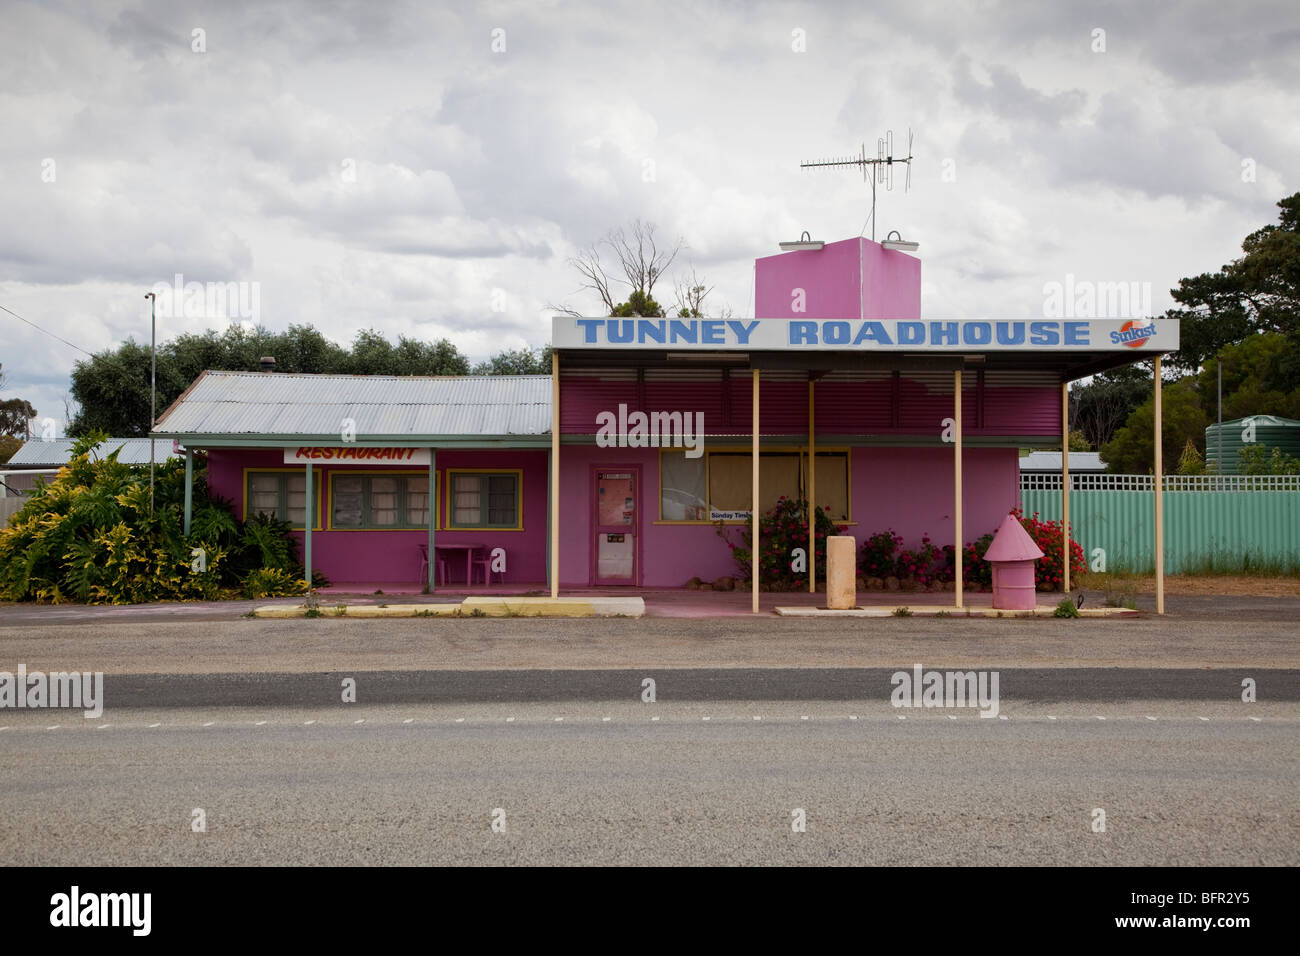 Tully Roadhouse, Western Australia Stock Photo